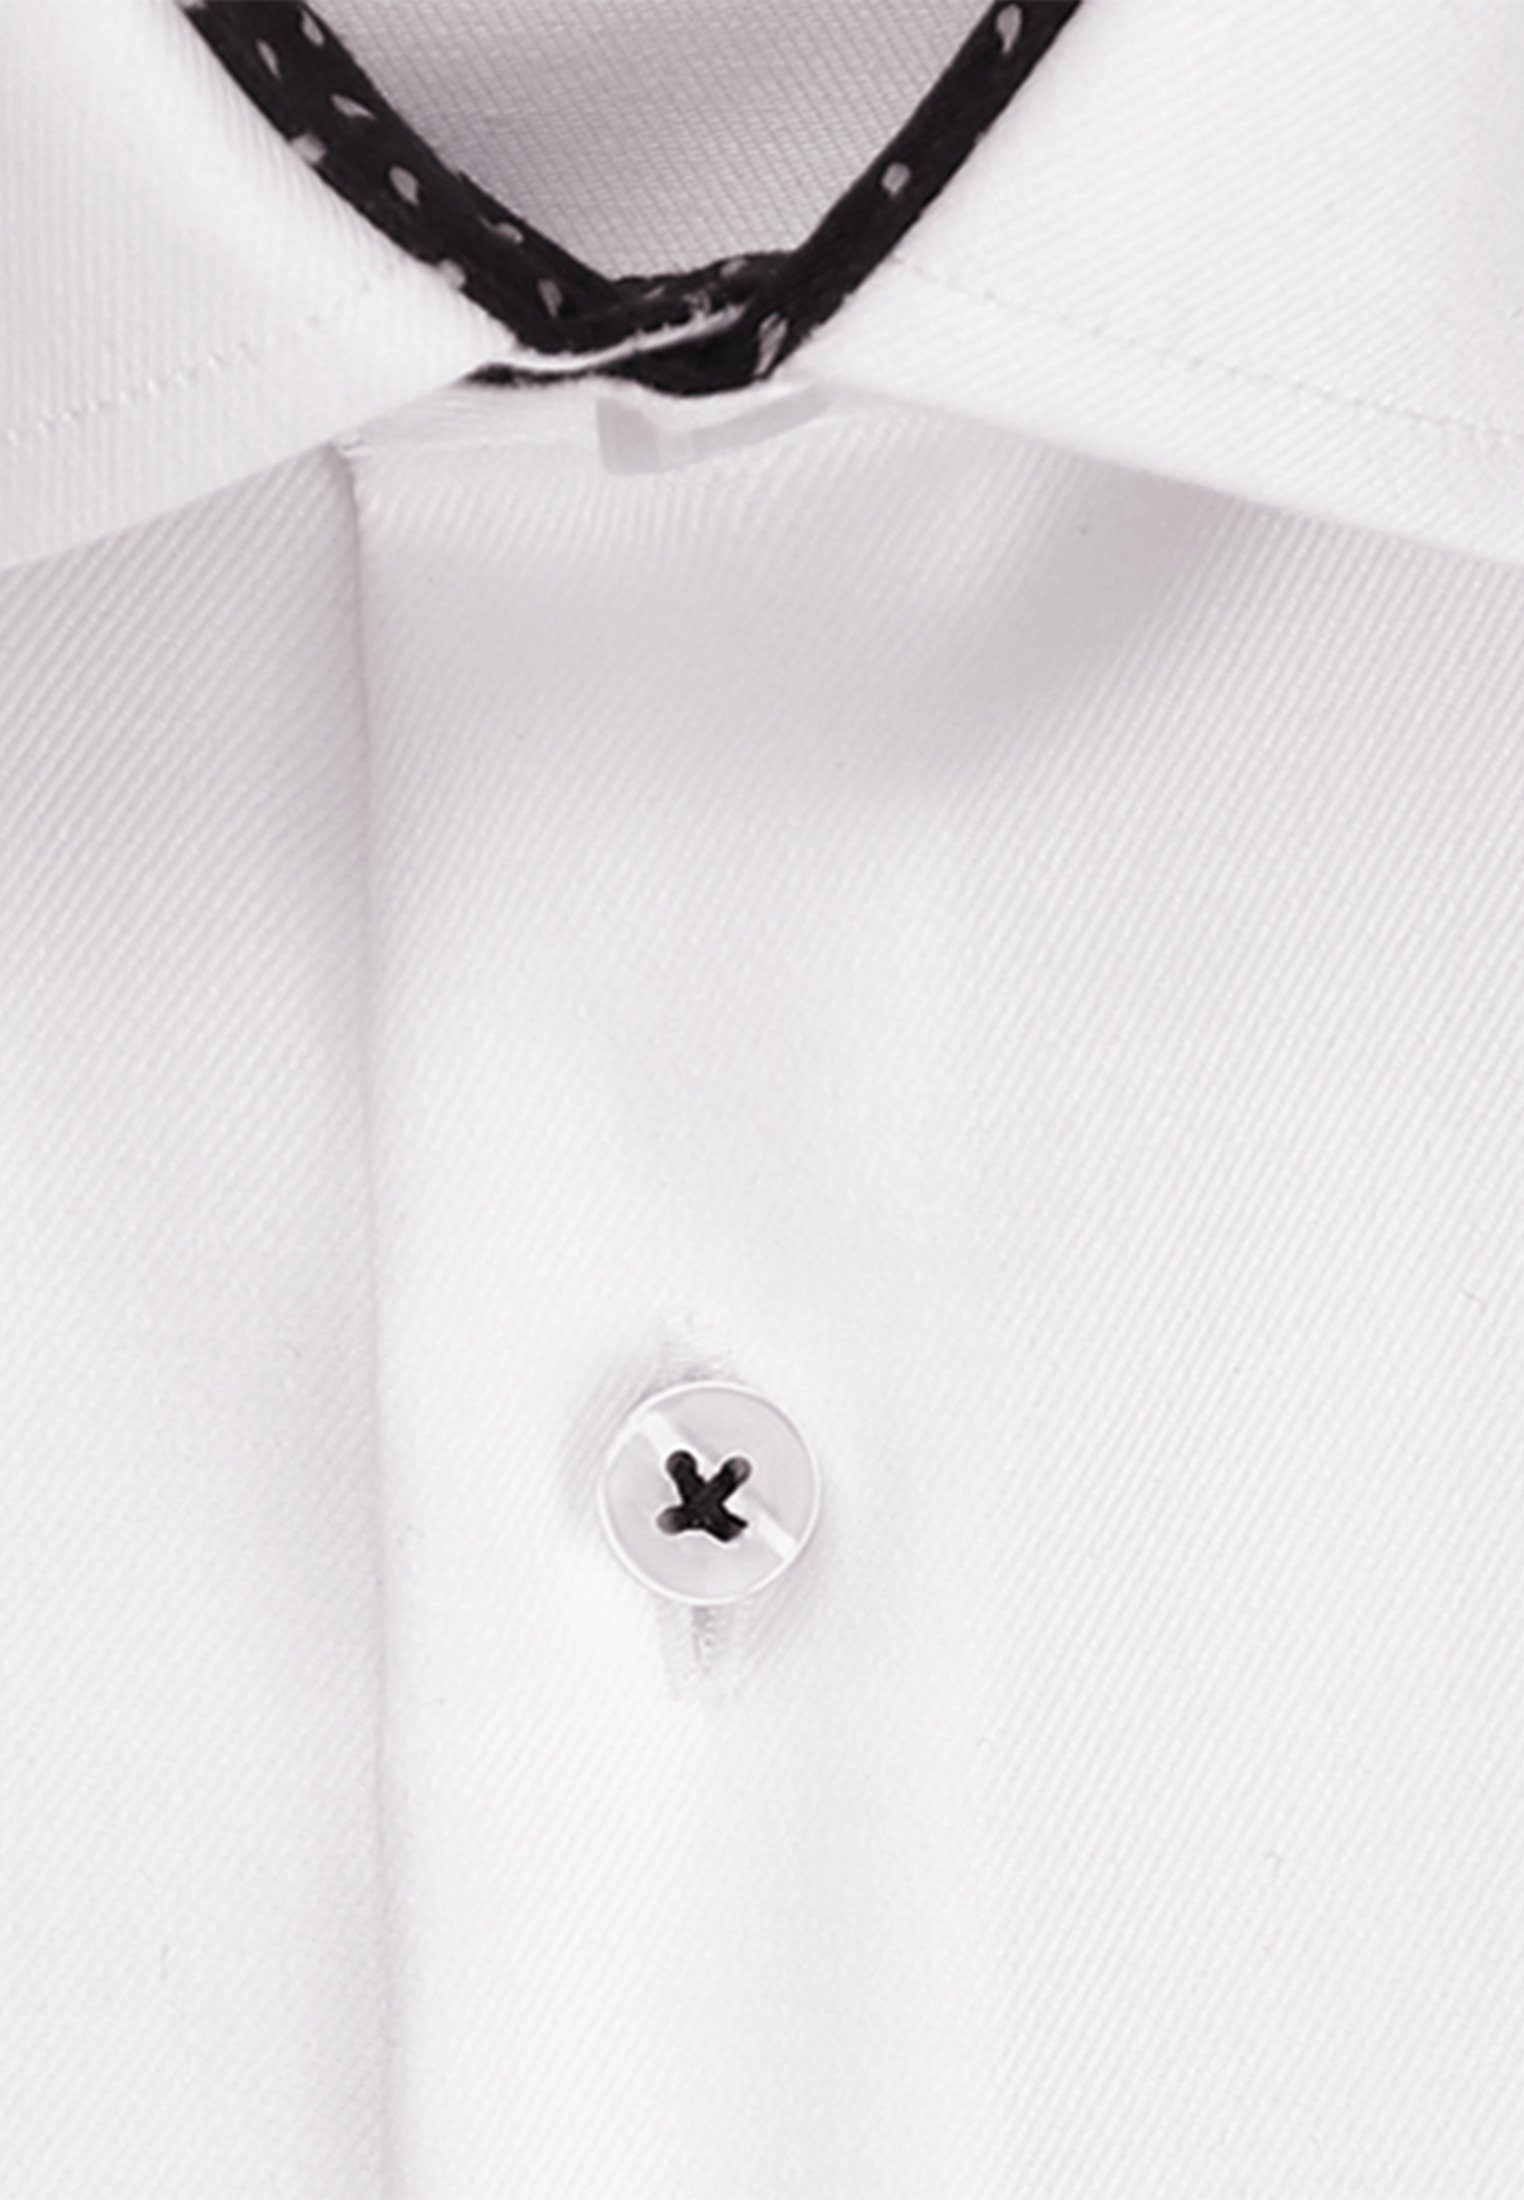 Langarm Shaped Shaped seidensticker Kentkragen Businesshemd Uni Weiß